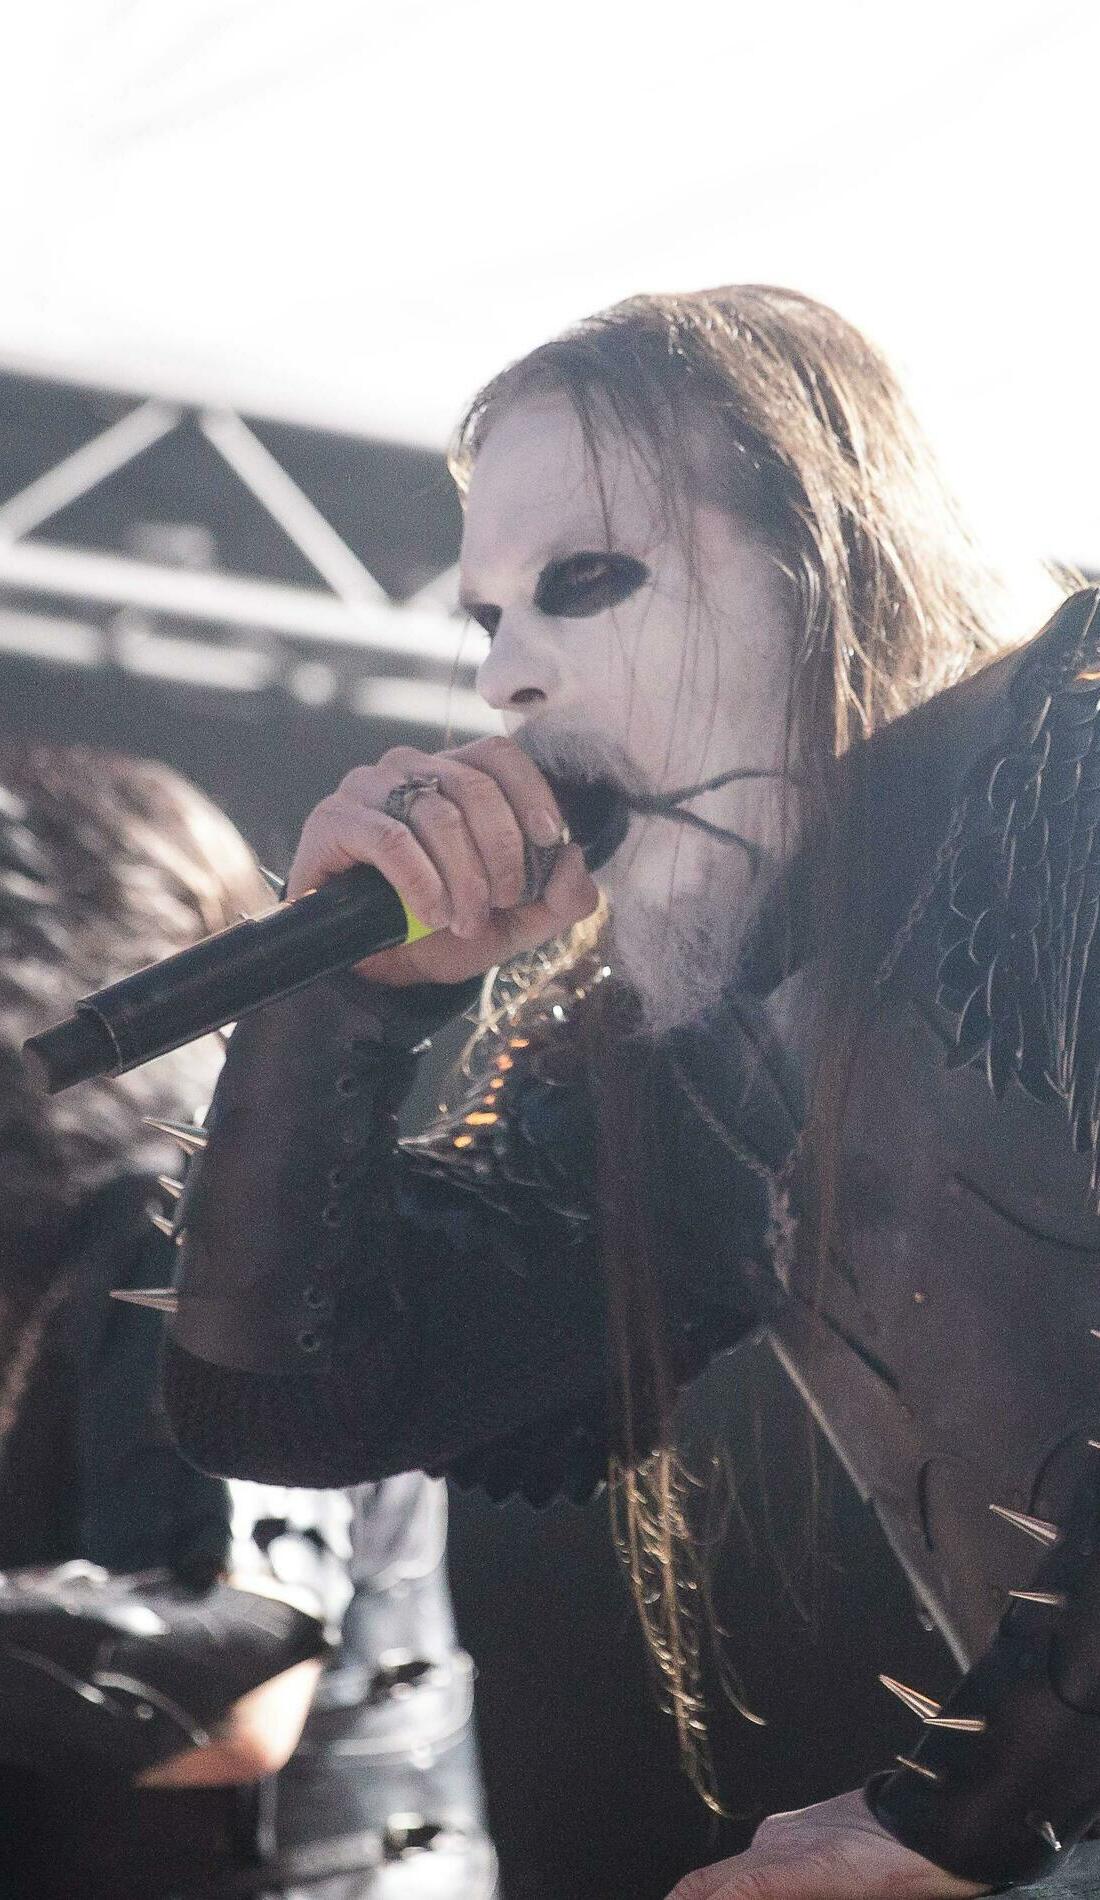 A Dark Funeral live event